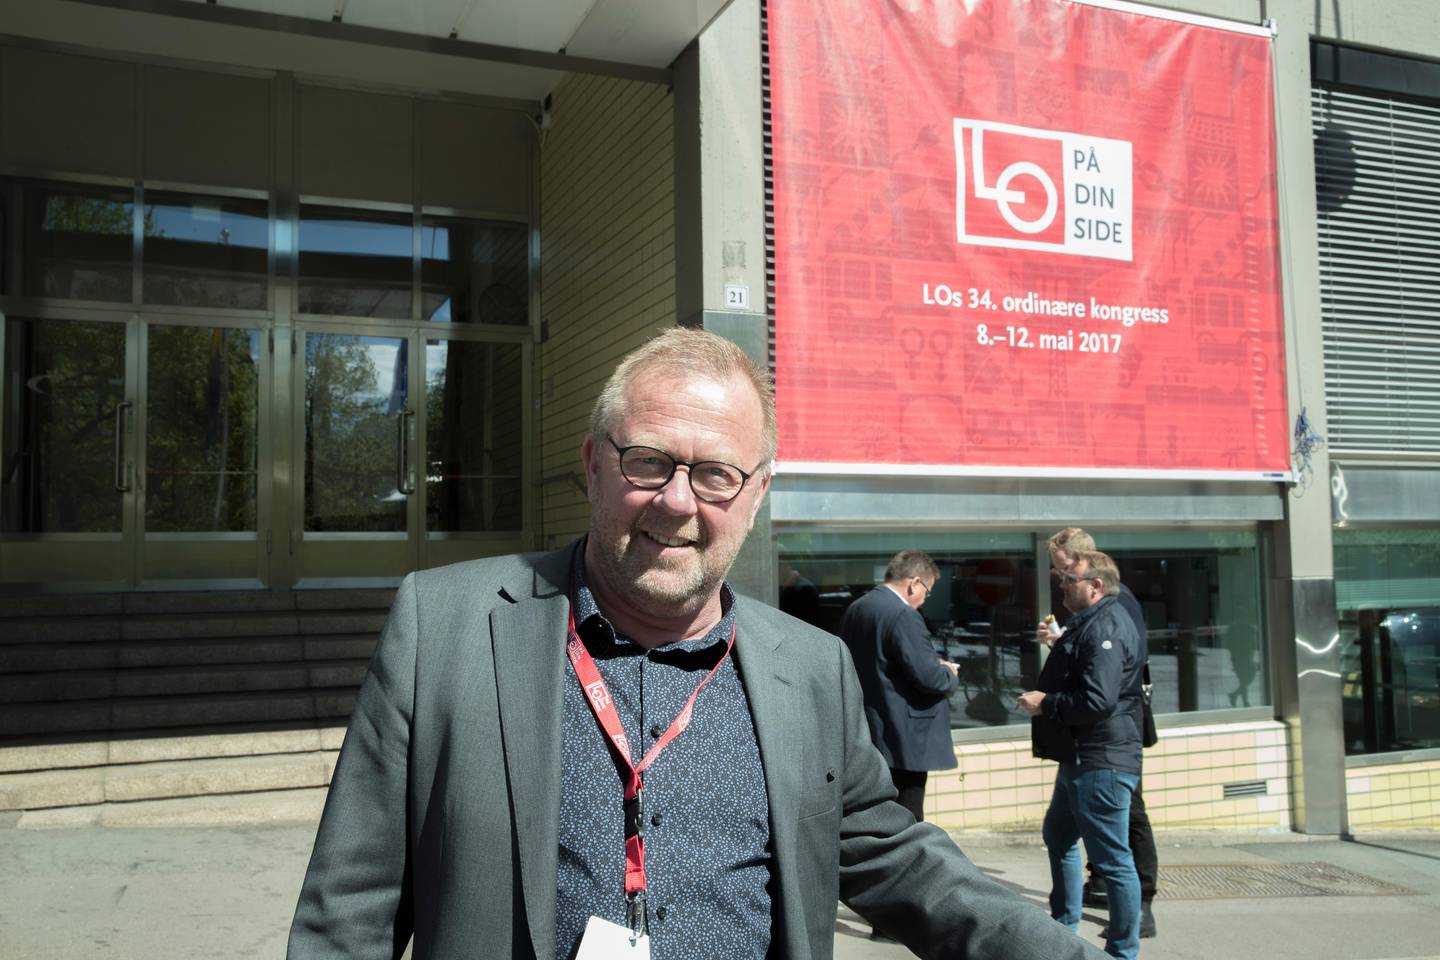 Oslo  20170508.
Forbundsleder Jan Olav Andersen i EL og IT Forbundet. 
Foto: Vidar Ruud / NTB scanpix